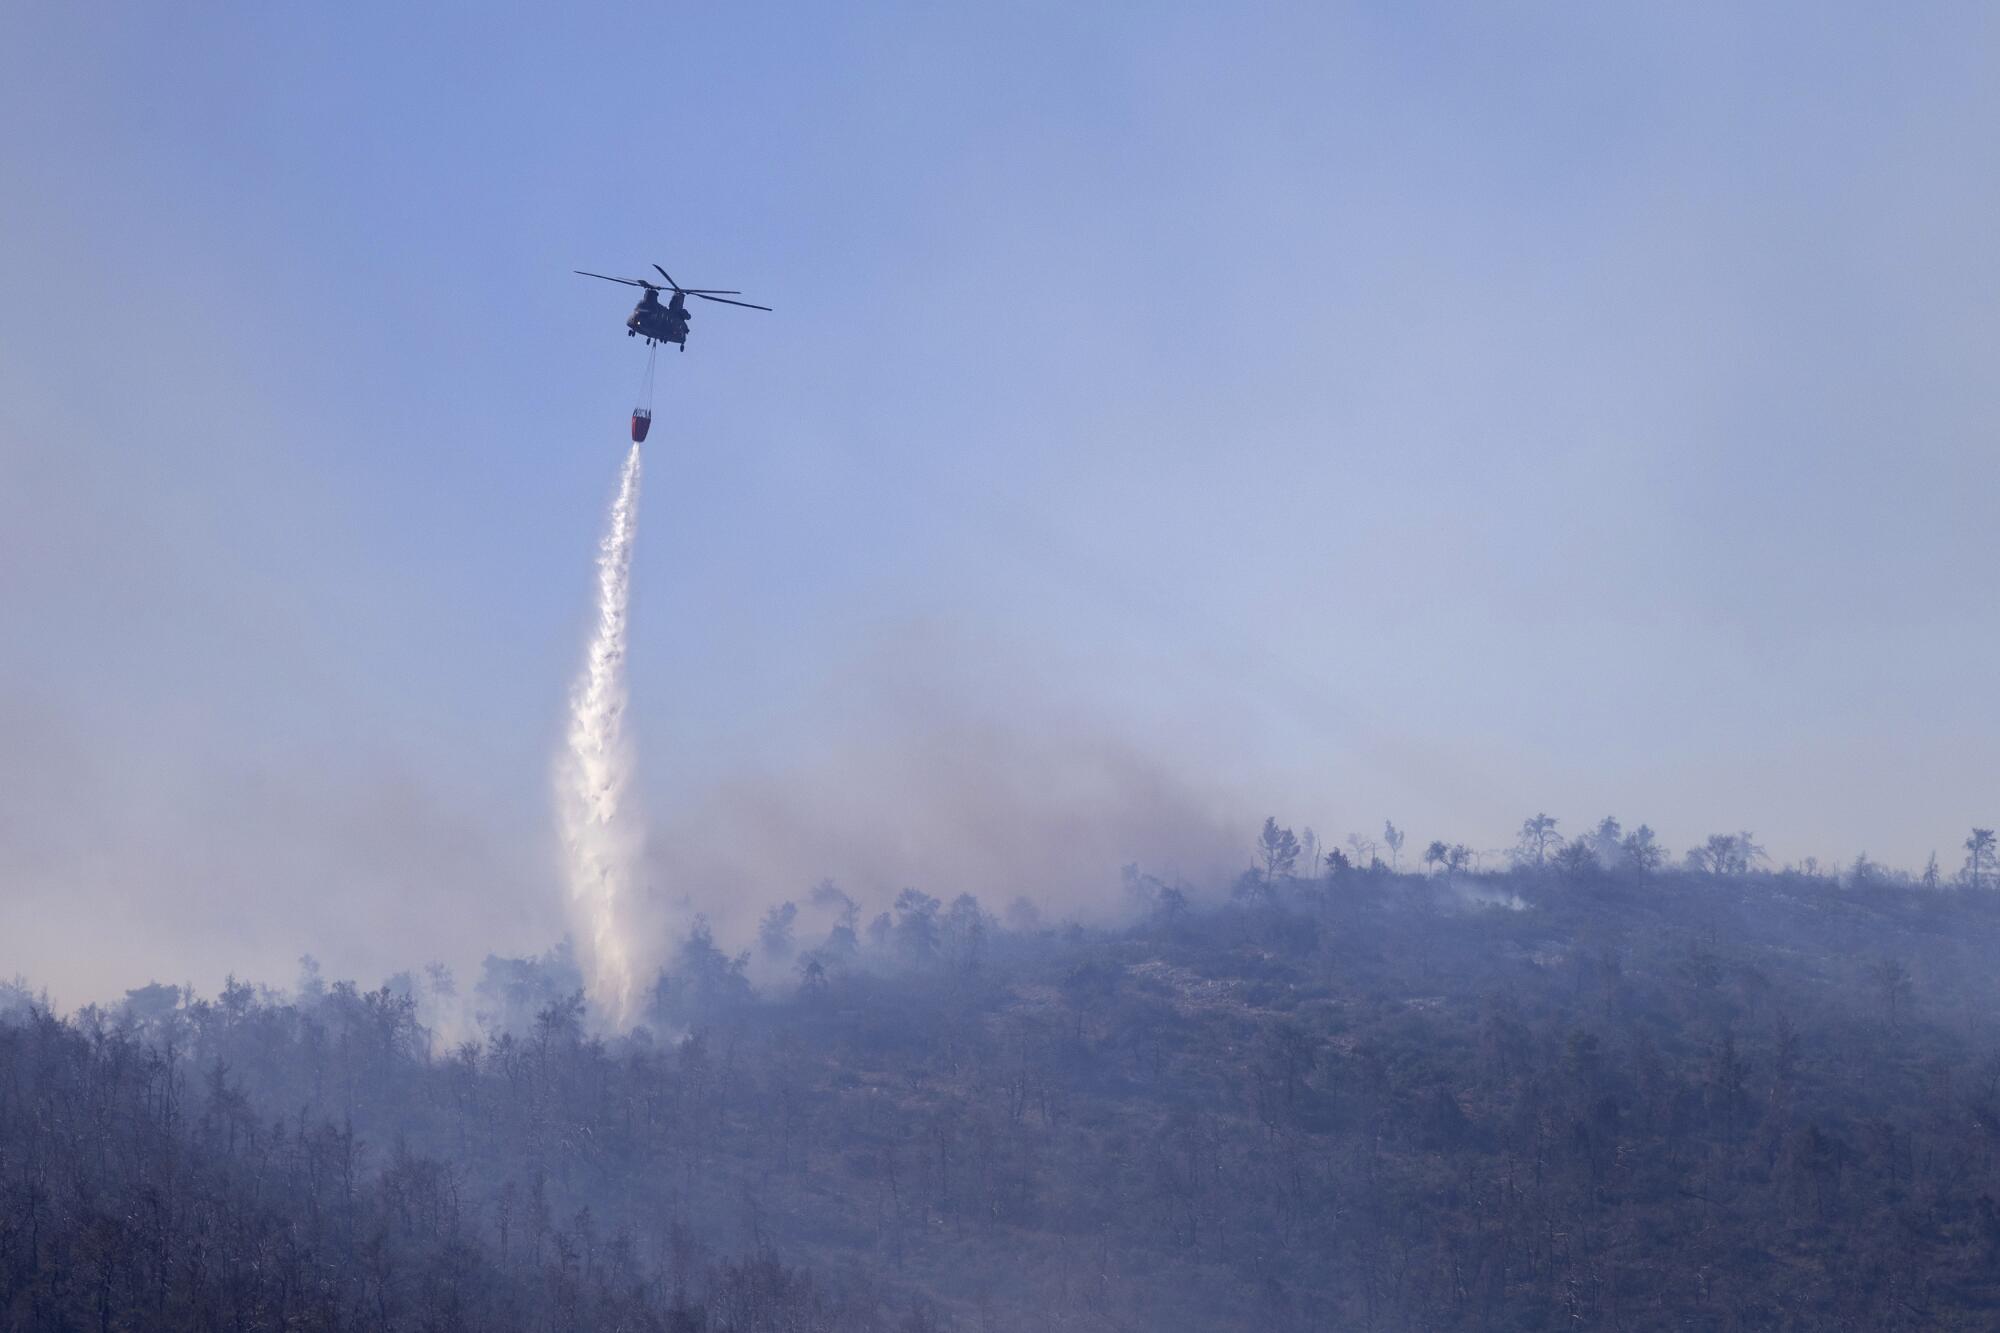 A helicopter dumps water over hazy, smoke-filled landscape